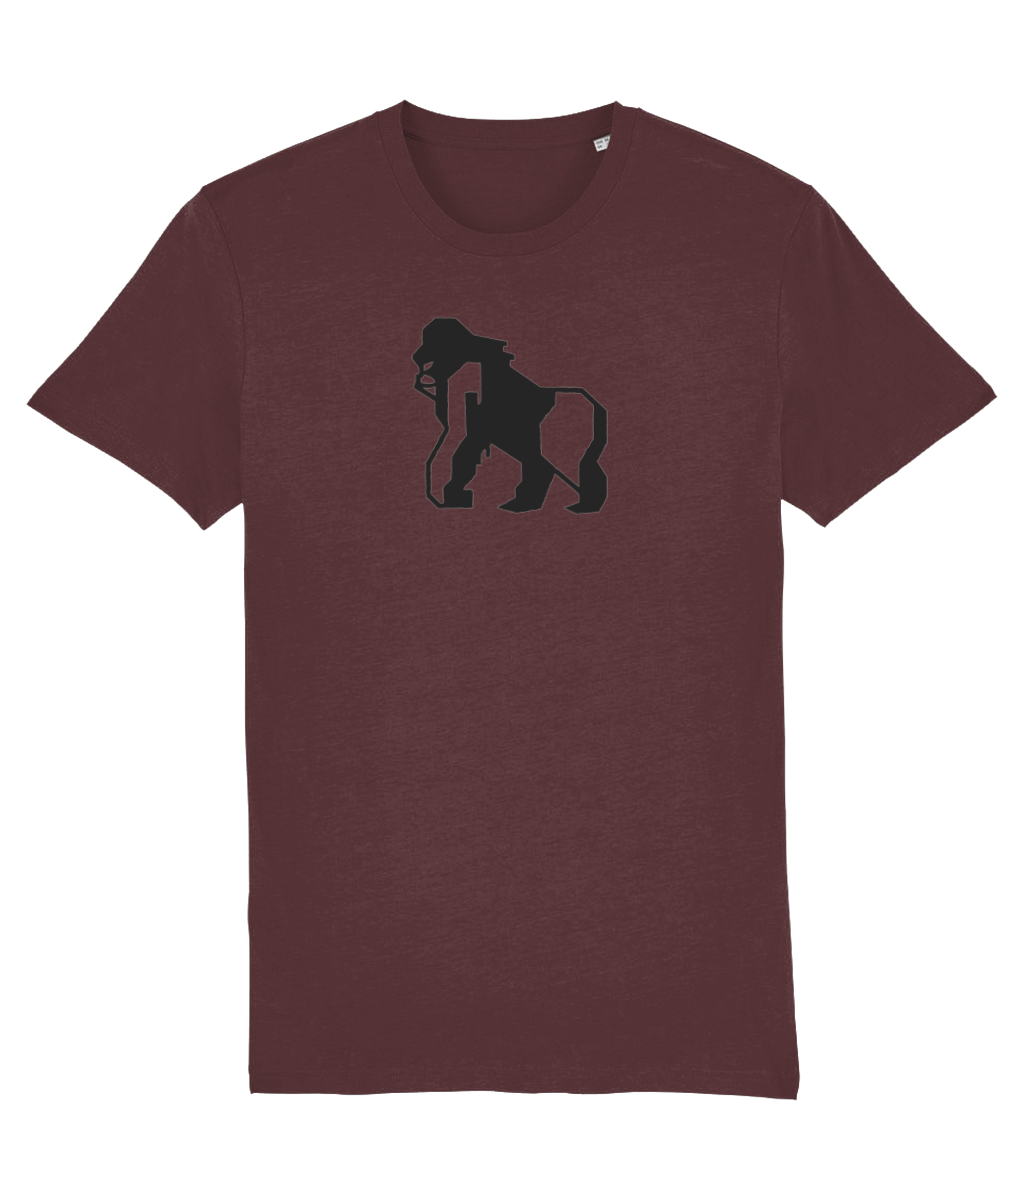 Burgundy Gorilla/Gayrilla Organic Cotton T-Shirt